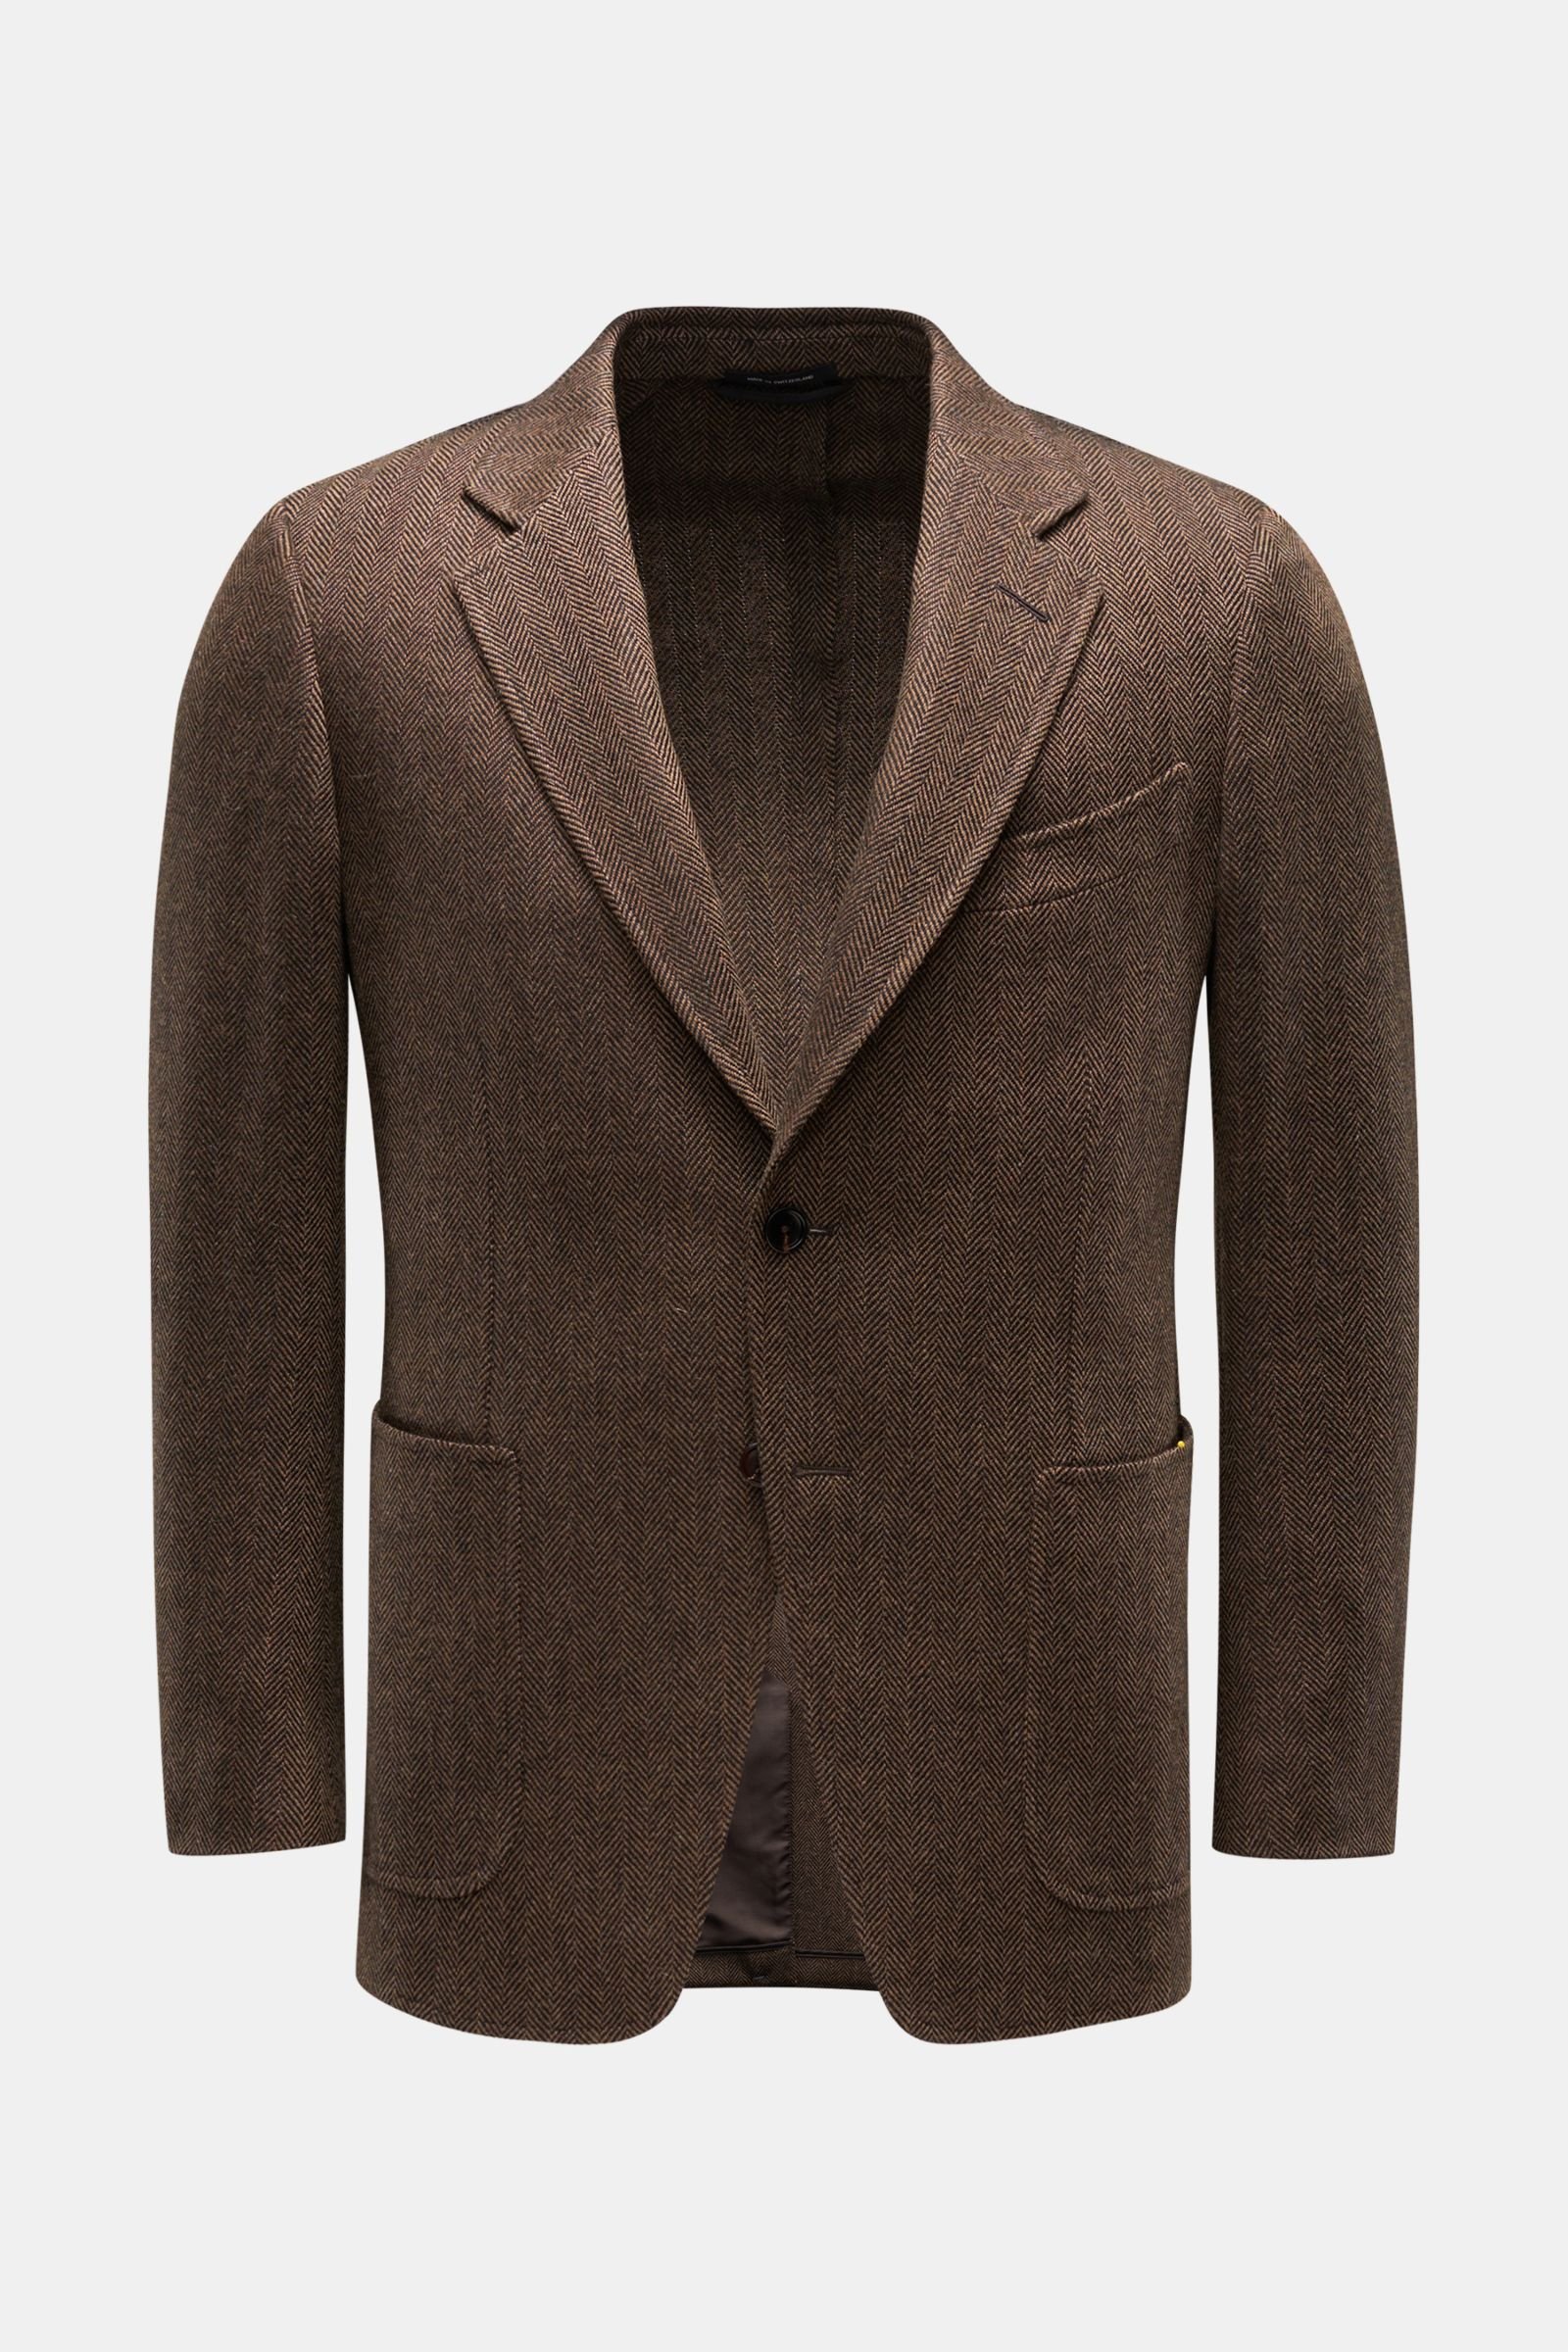 Smart-casual jacket 'O'Connor' light brown/black patterned